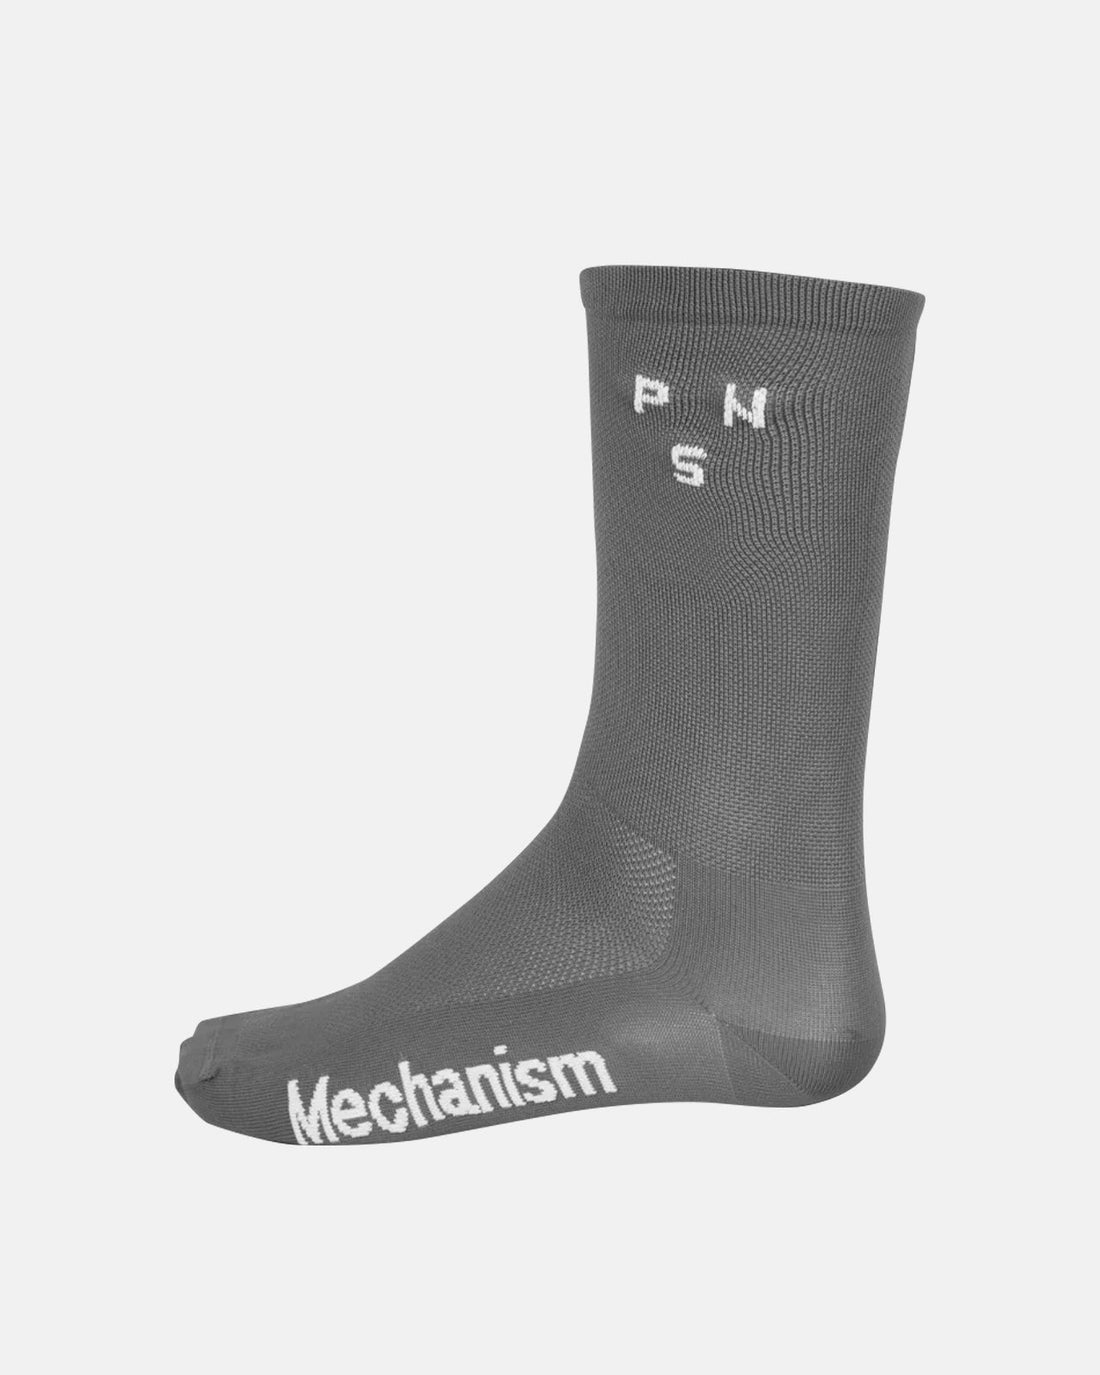 Pas Normal Studios Mechanism Socks - Medium Grey